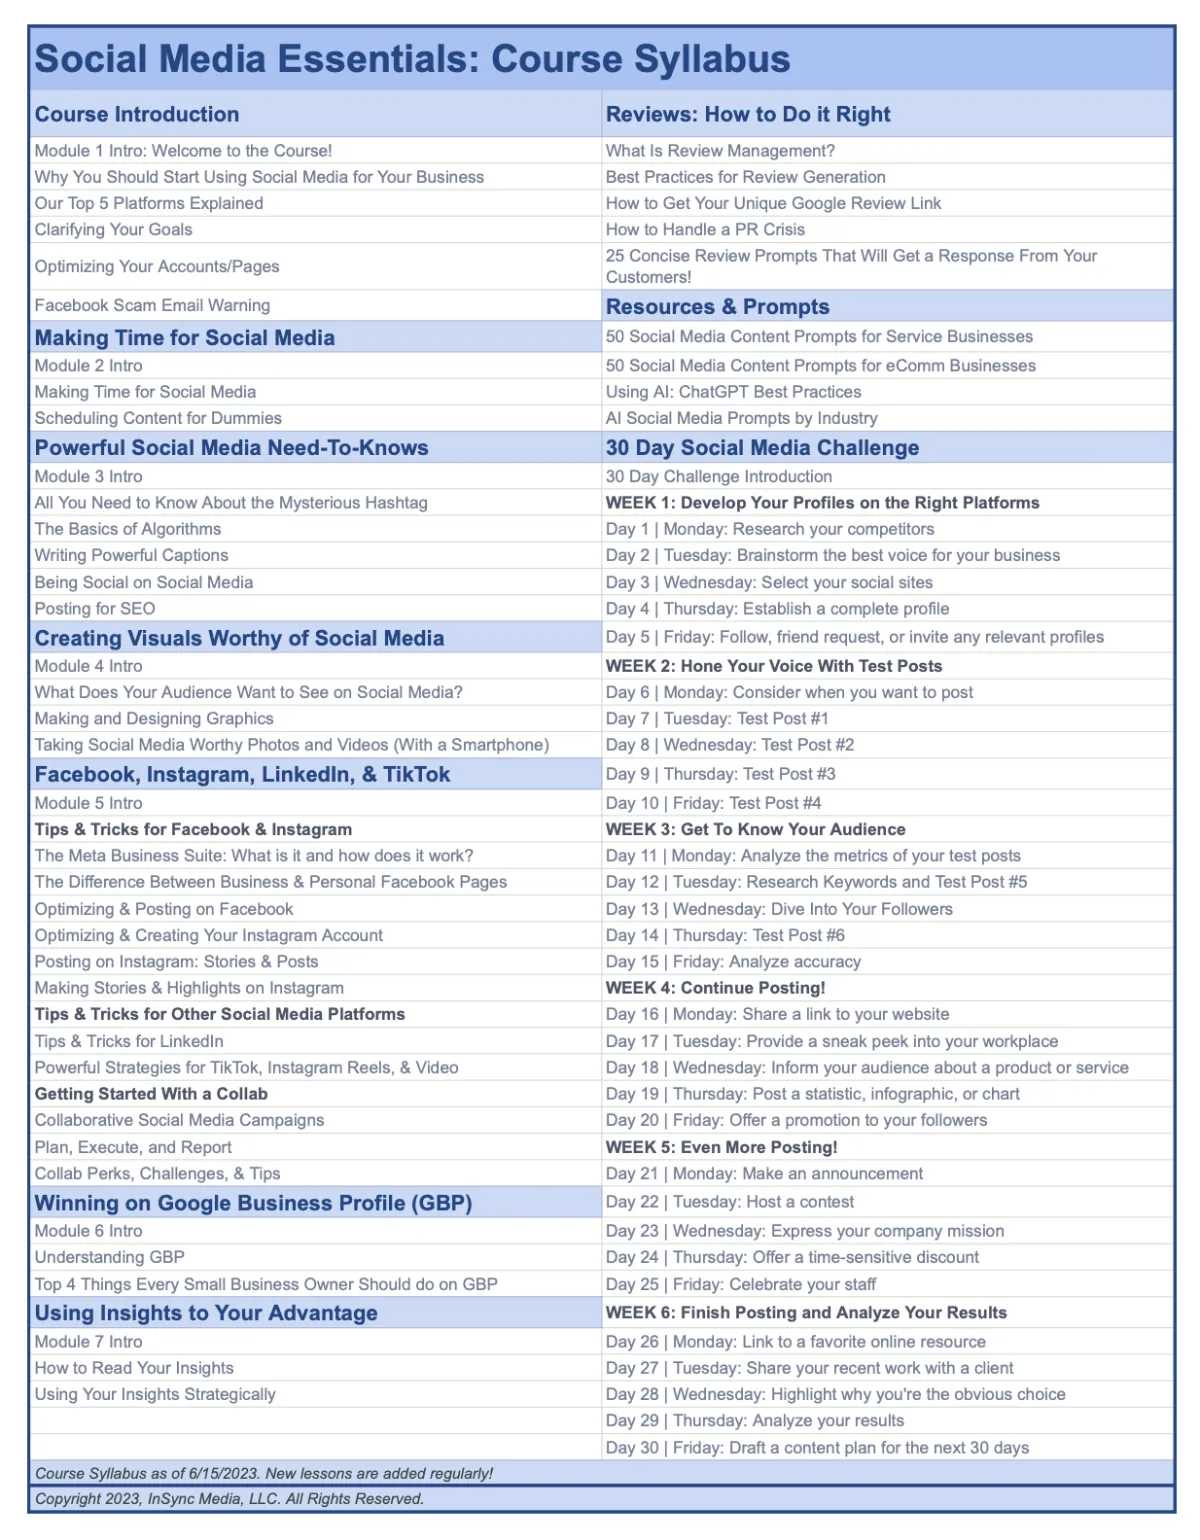 Social Media Essentials - Course Syllabus